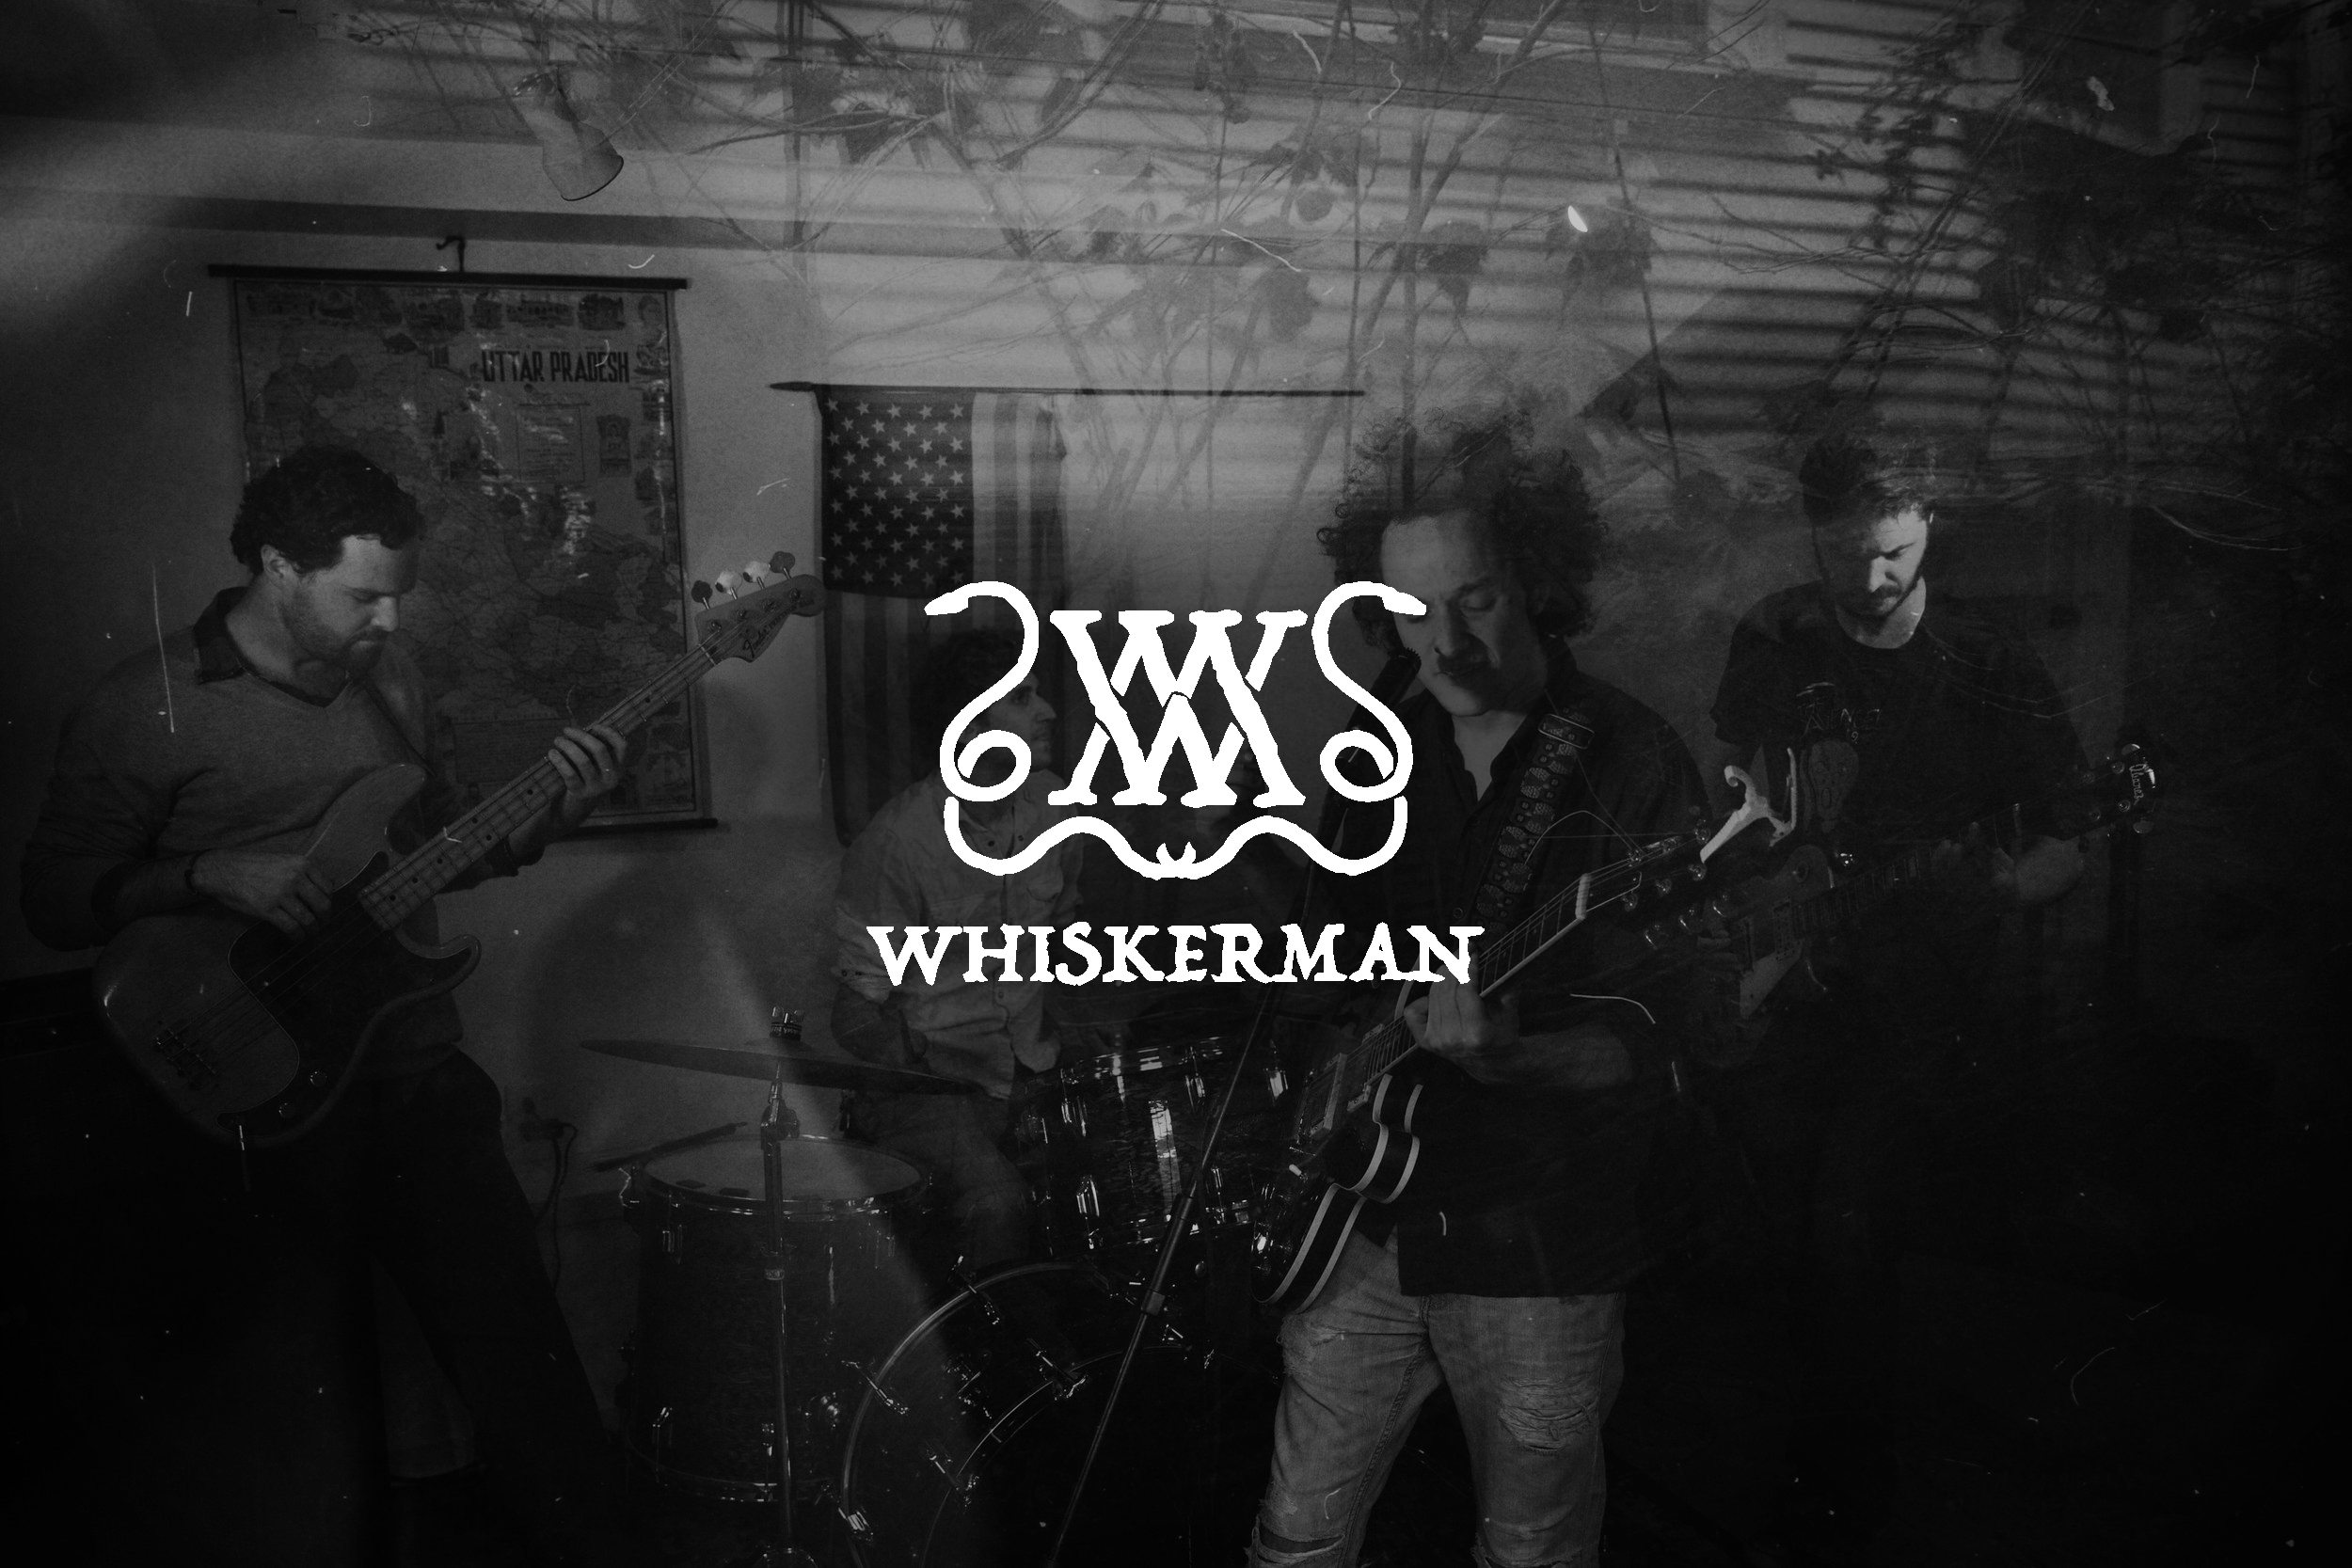 Whiskerman